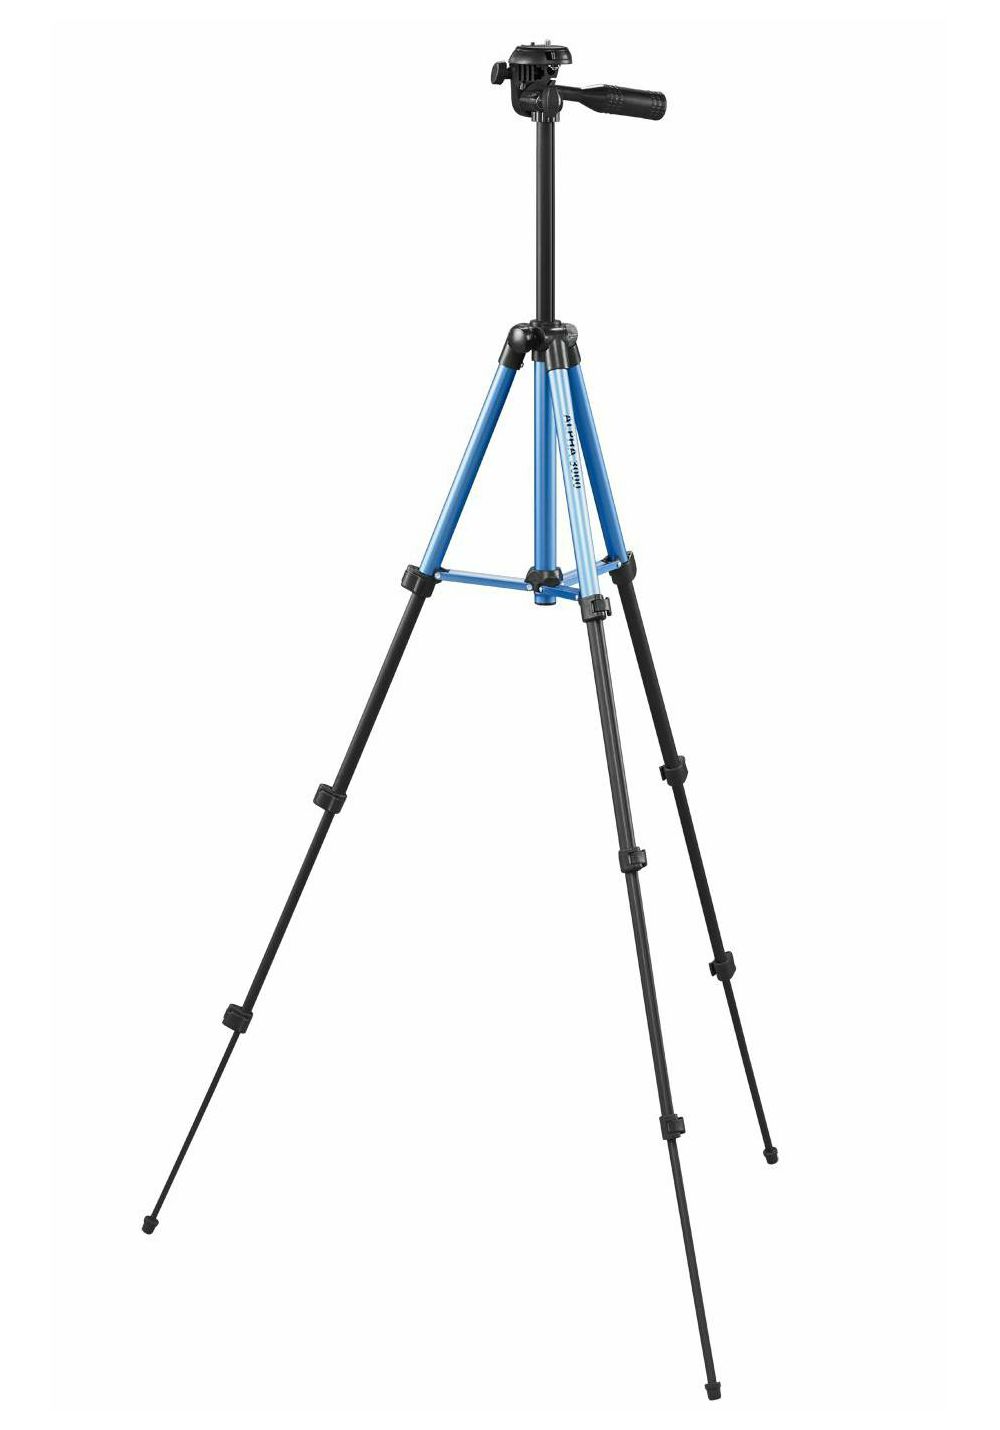 Cullmann Alpha 3000 Blue plavi 106cm tripod tronožac stativ za fotoaparat s 3-Way Head glavom (52141)